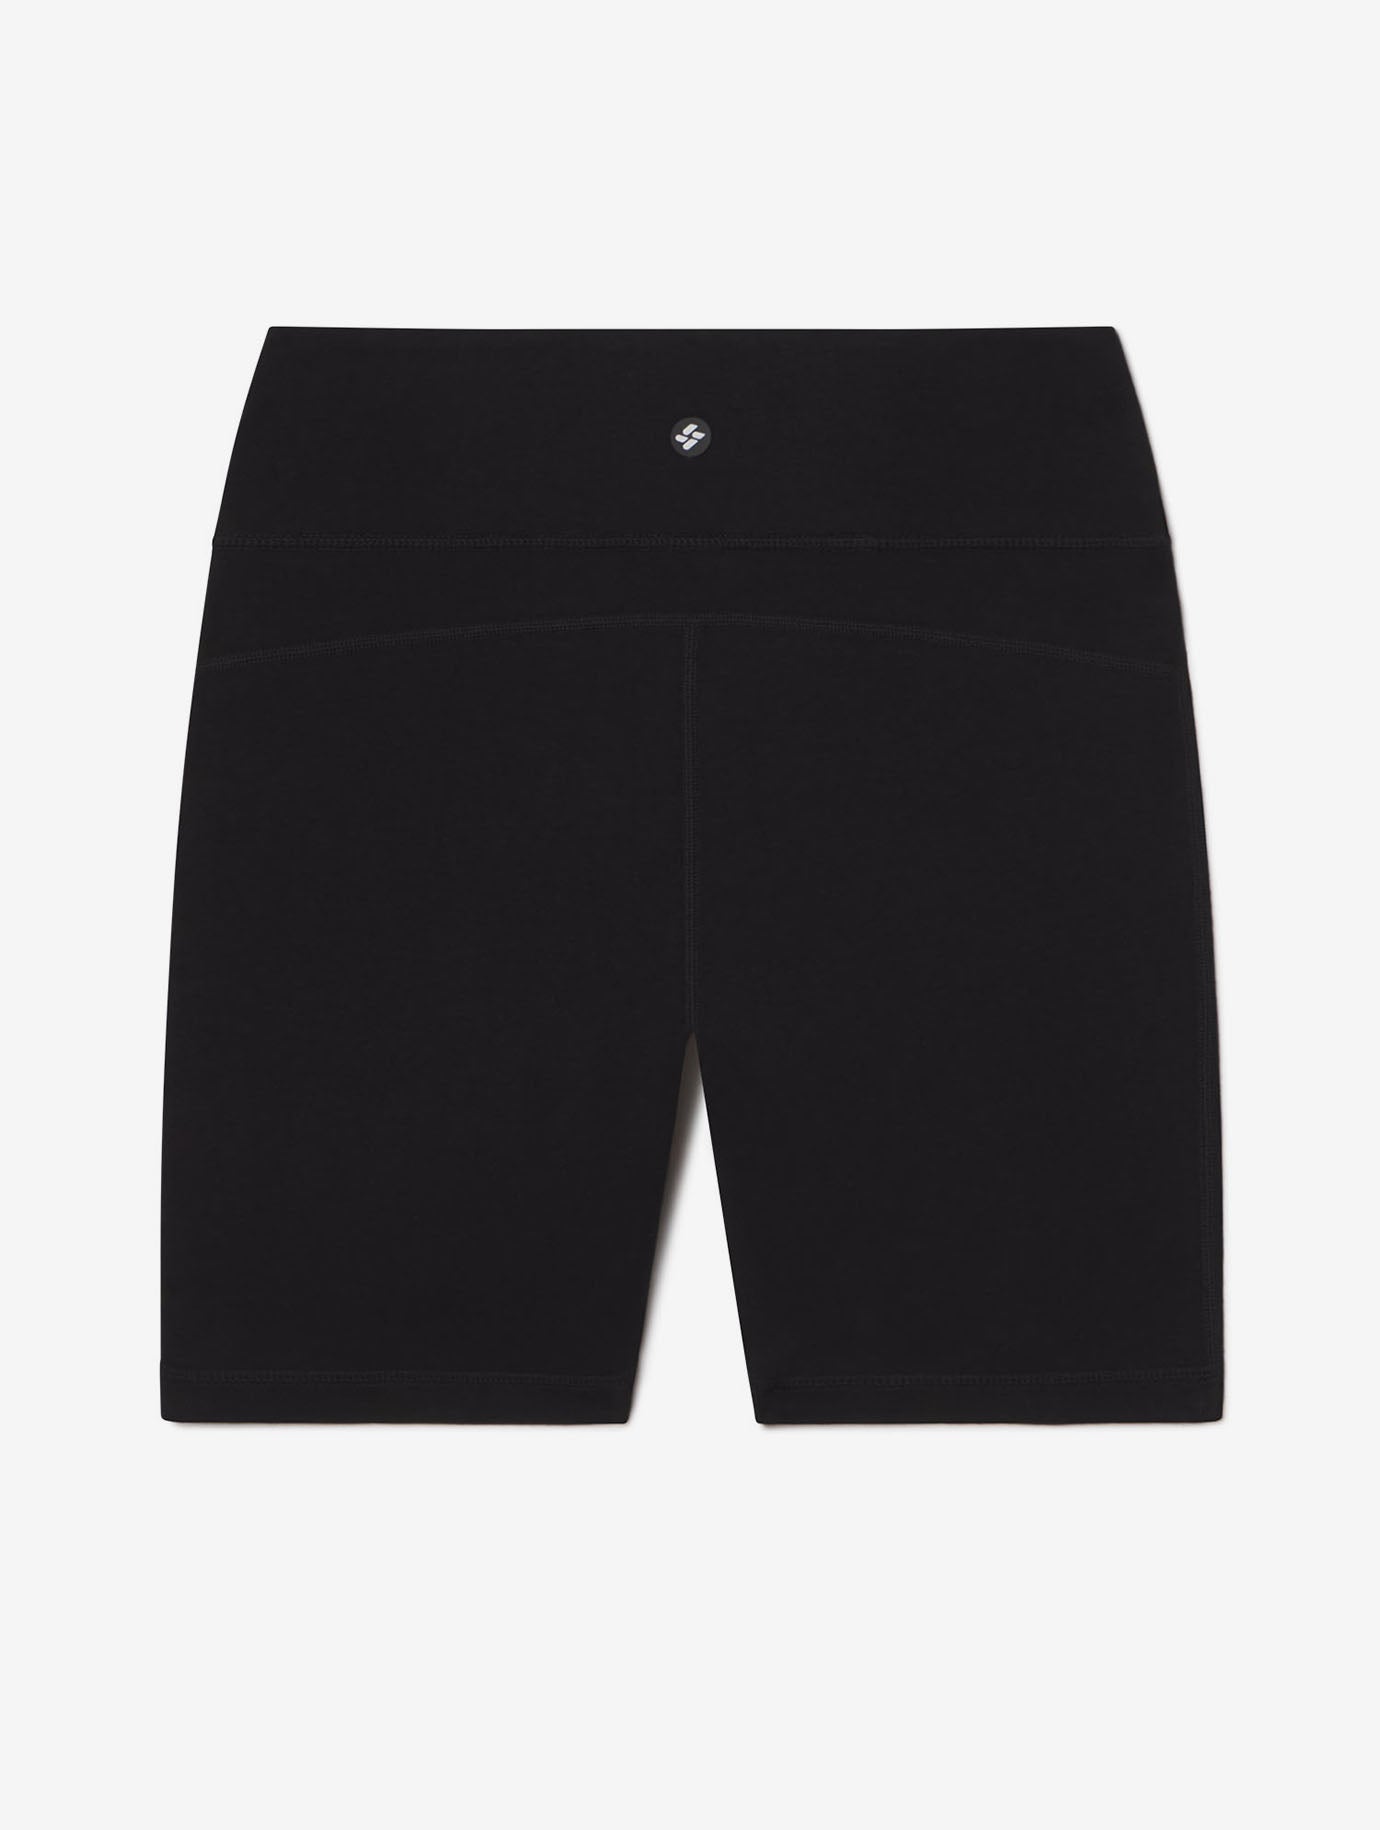 Allwear Bamboo 6’’ Compression Shorts